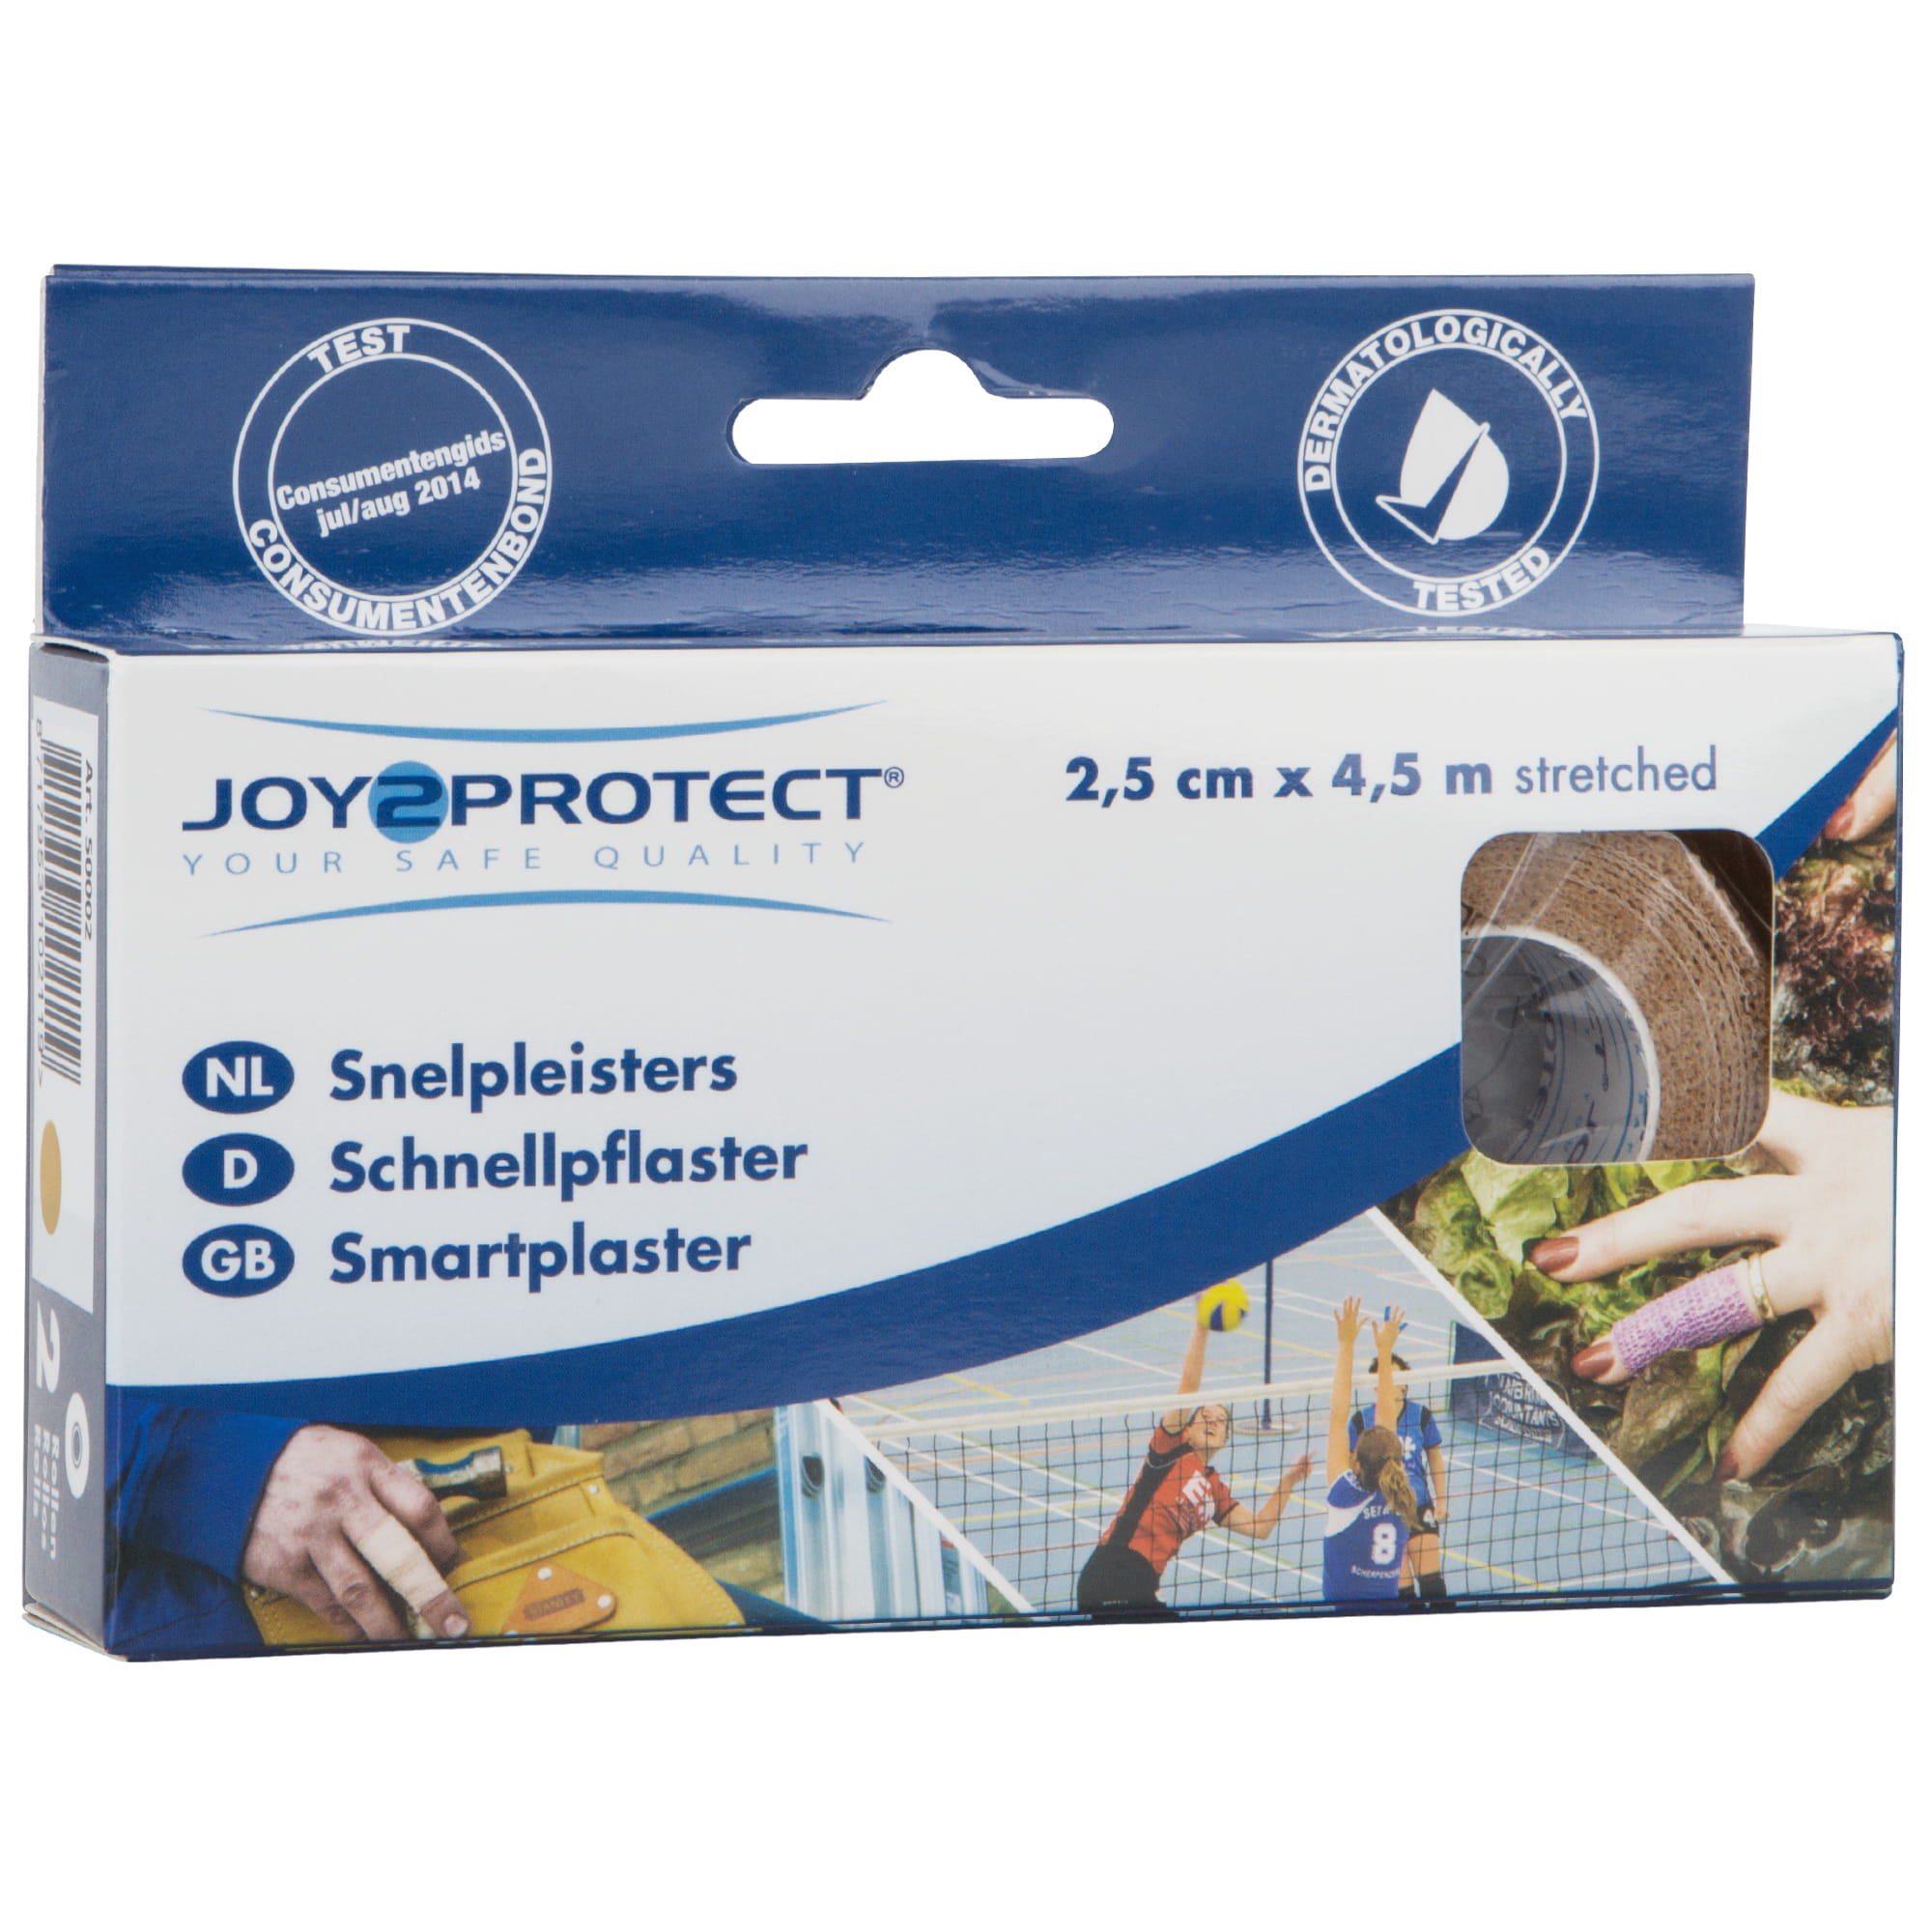 JOY2PROTECT Schnellpflaster 2,5 cm x 4,5 m